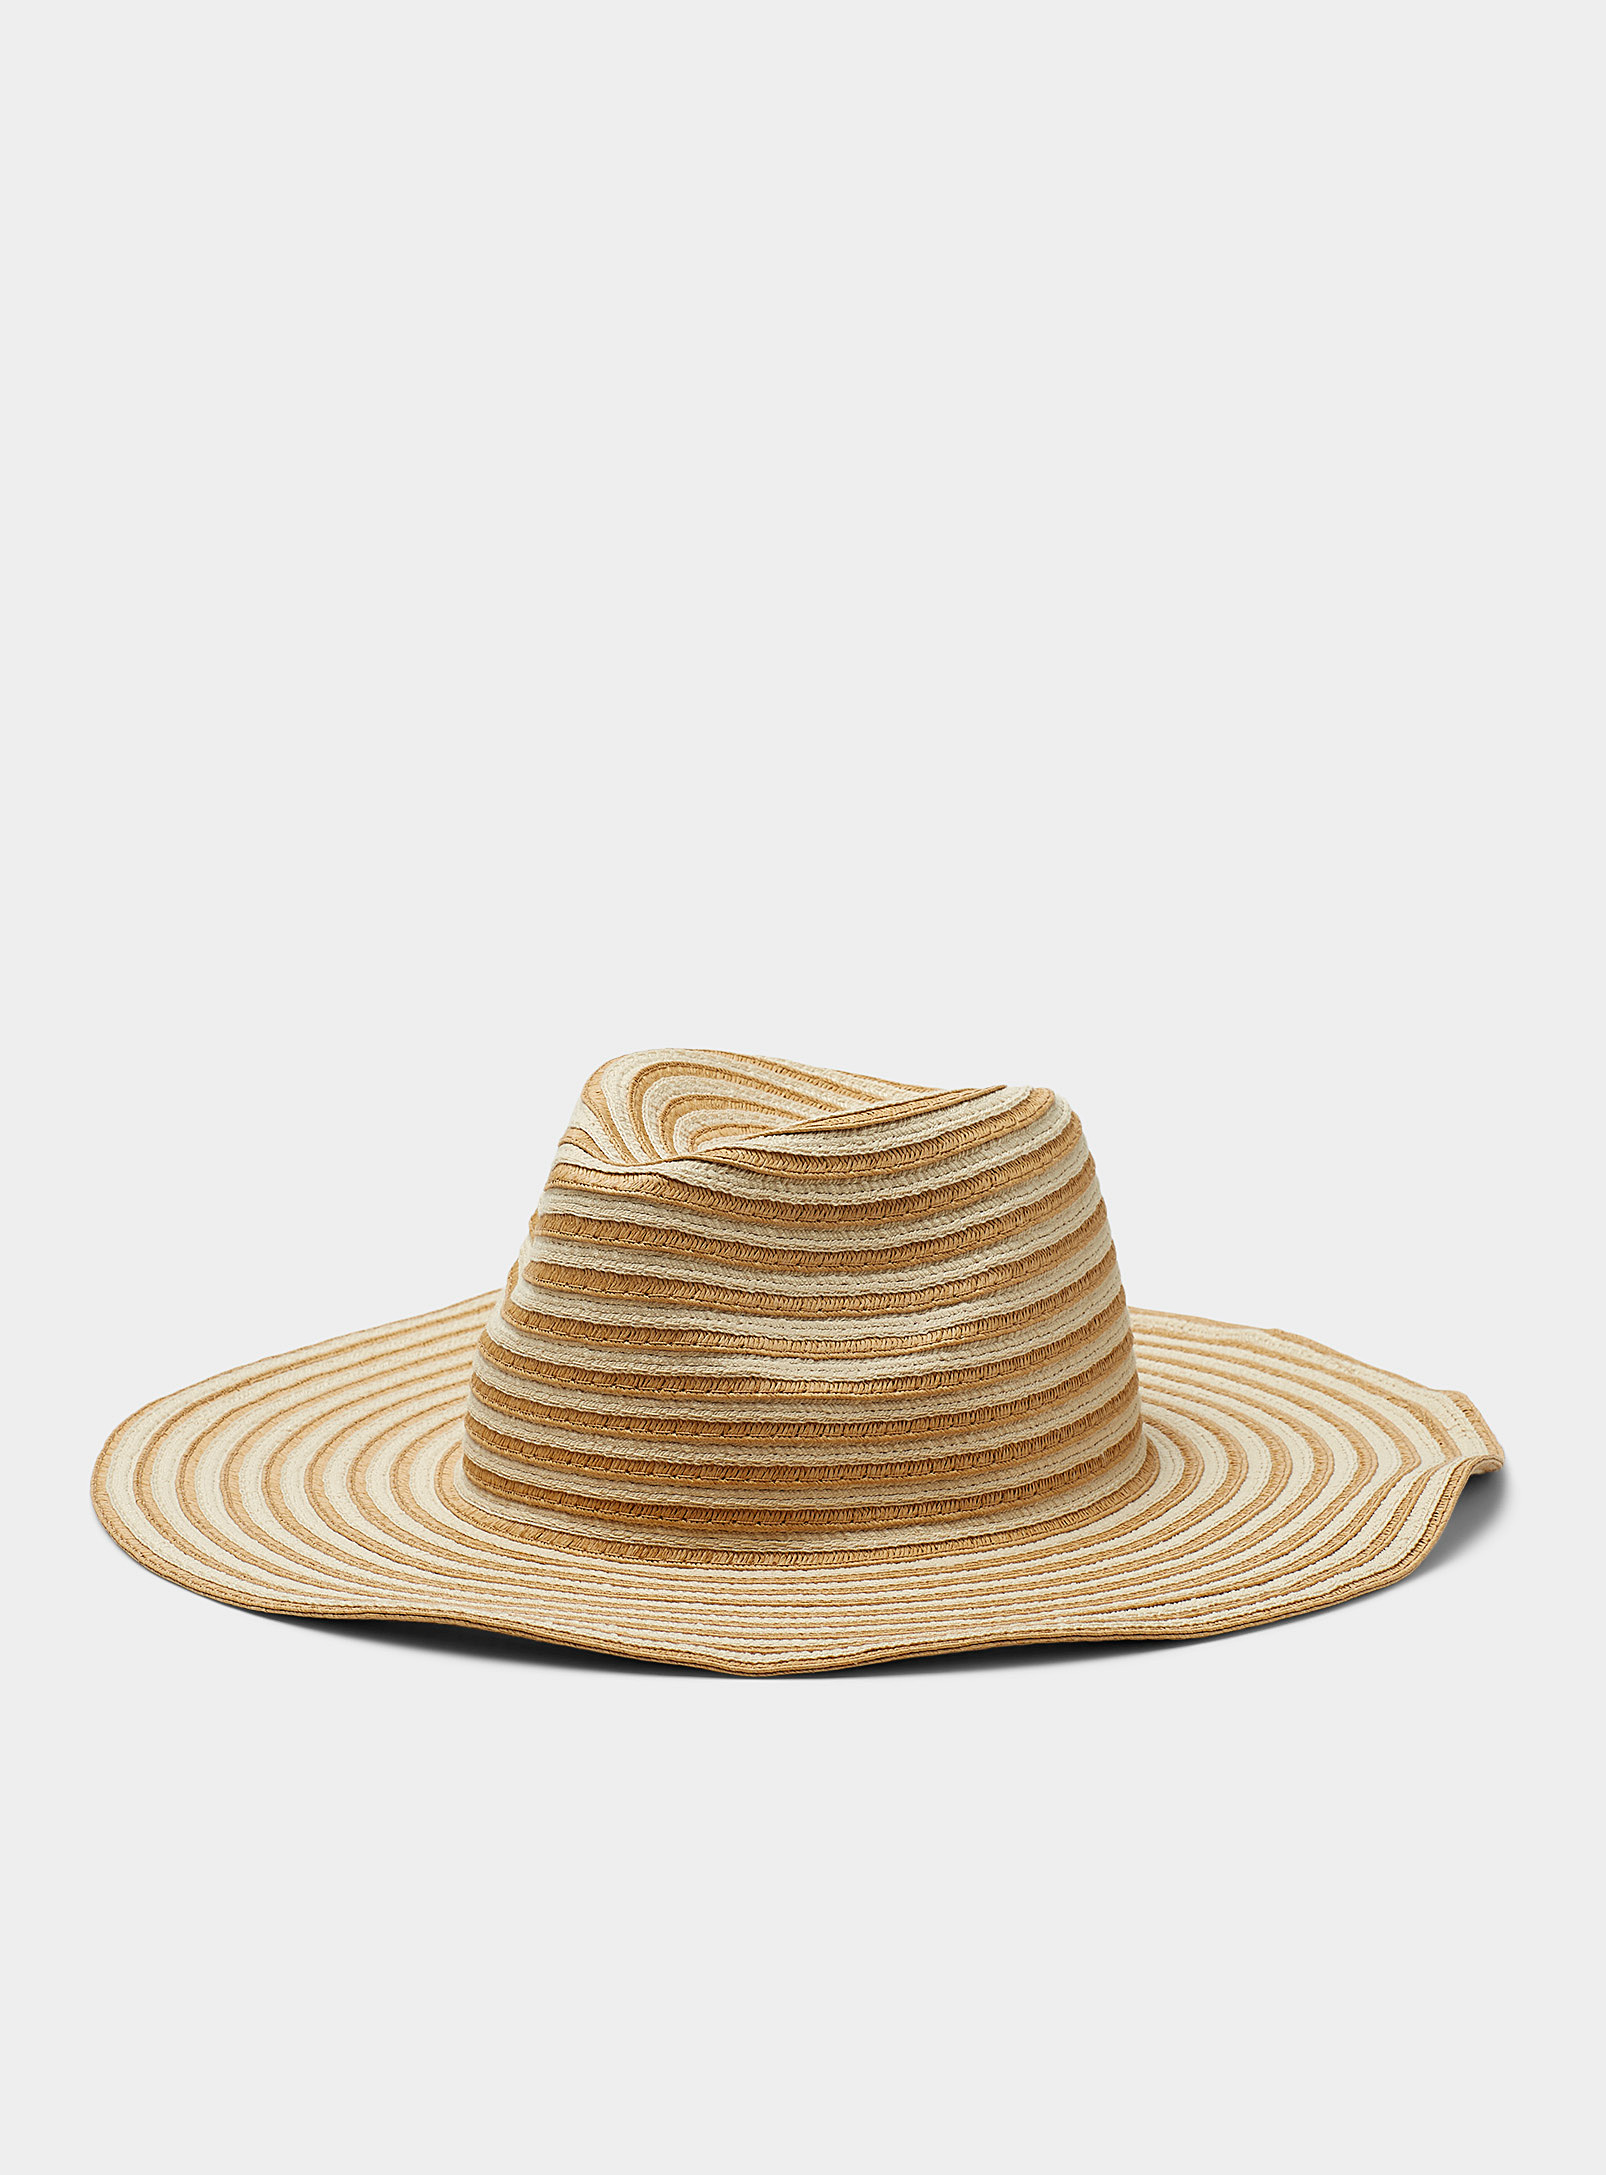 Simons - Women's Two-tone soft straw hat